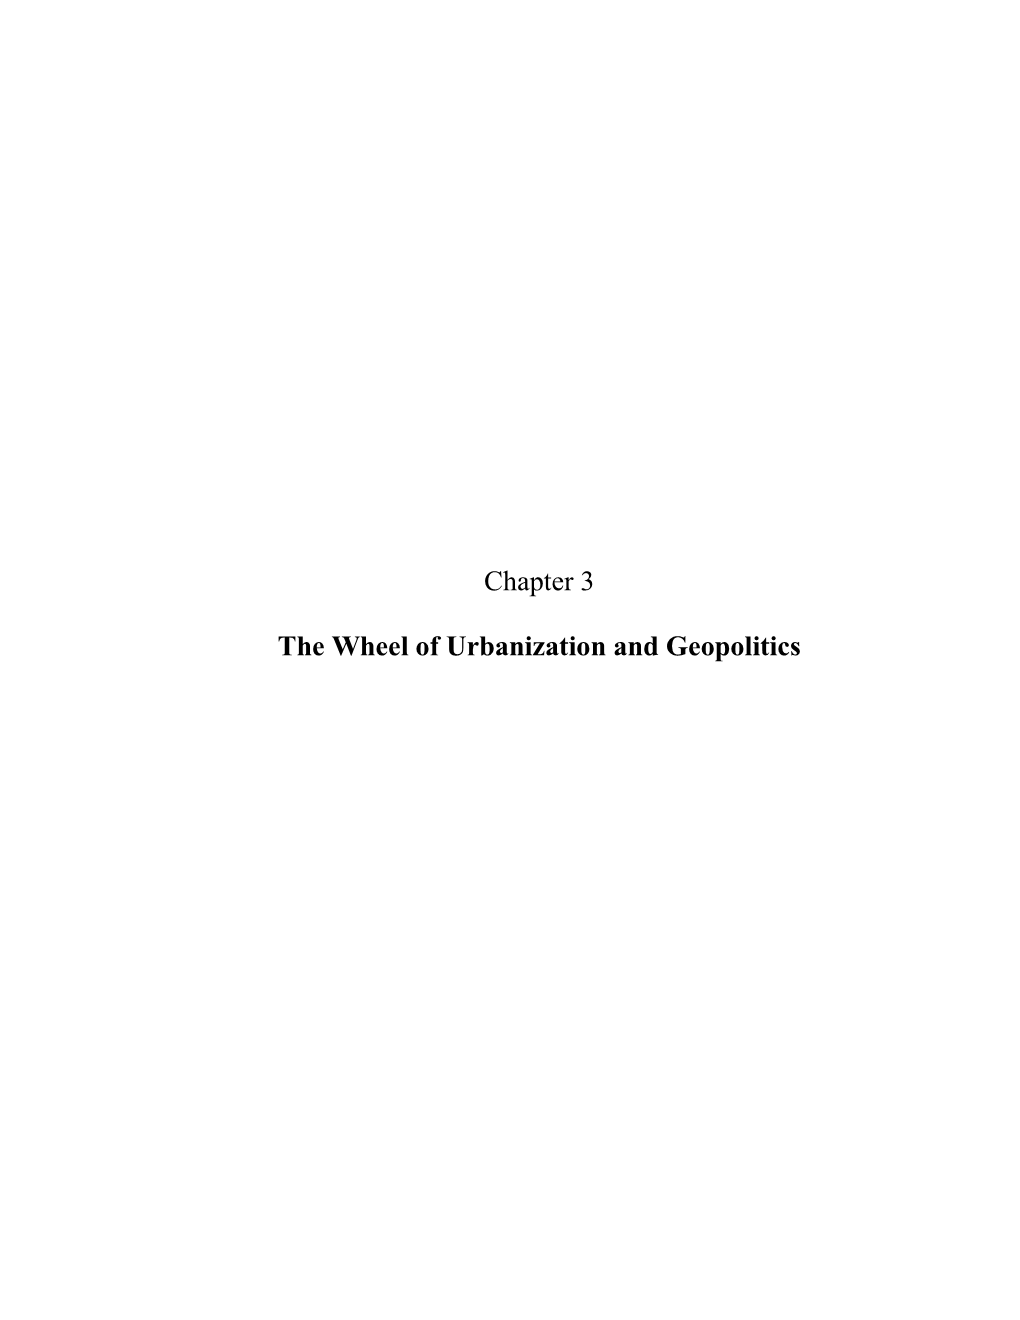 Chapter 3 the Wheel of Urbanization and Geopolitics